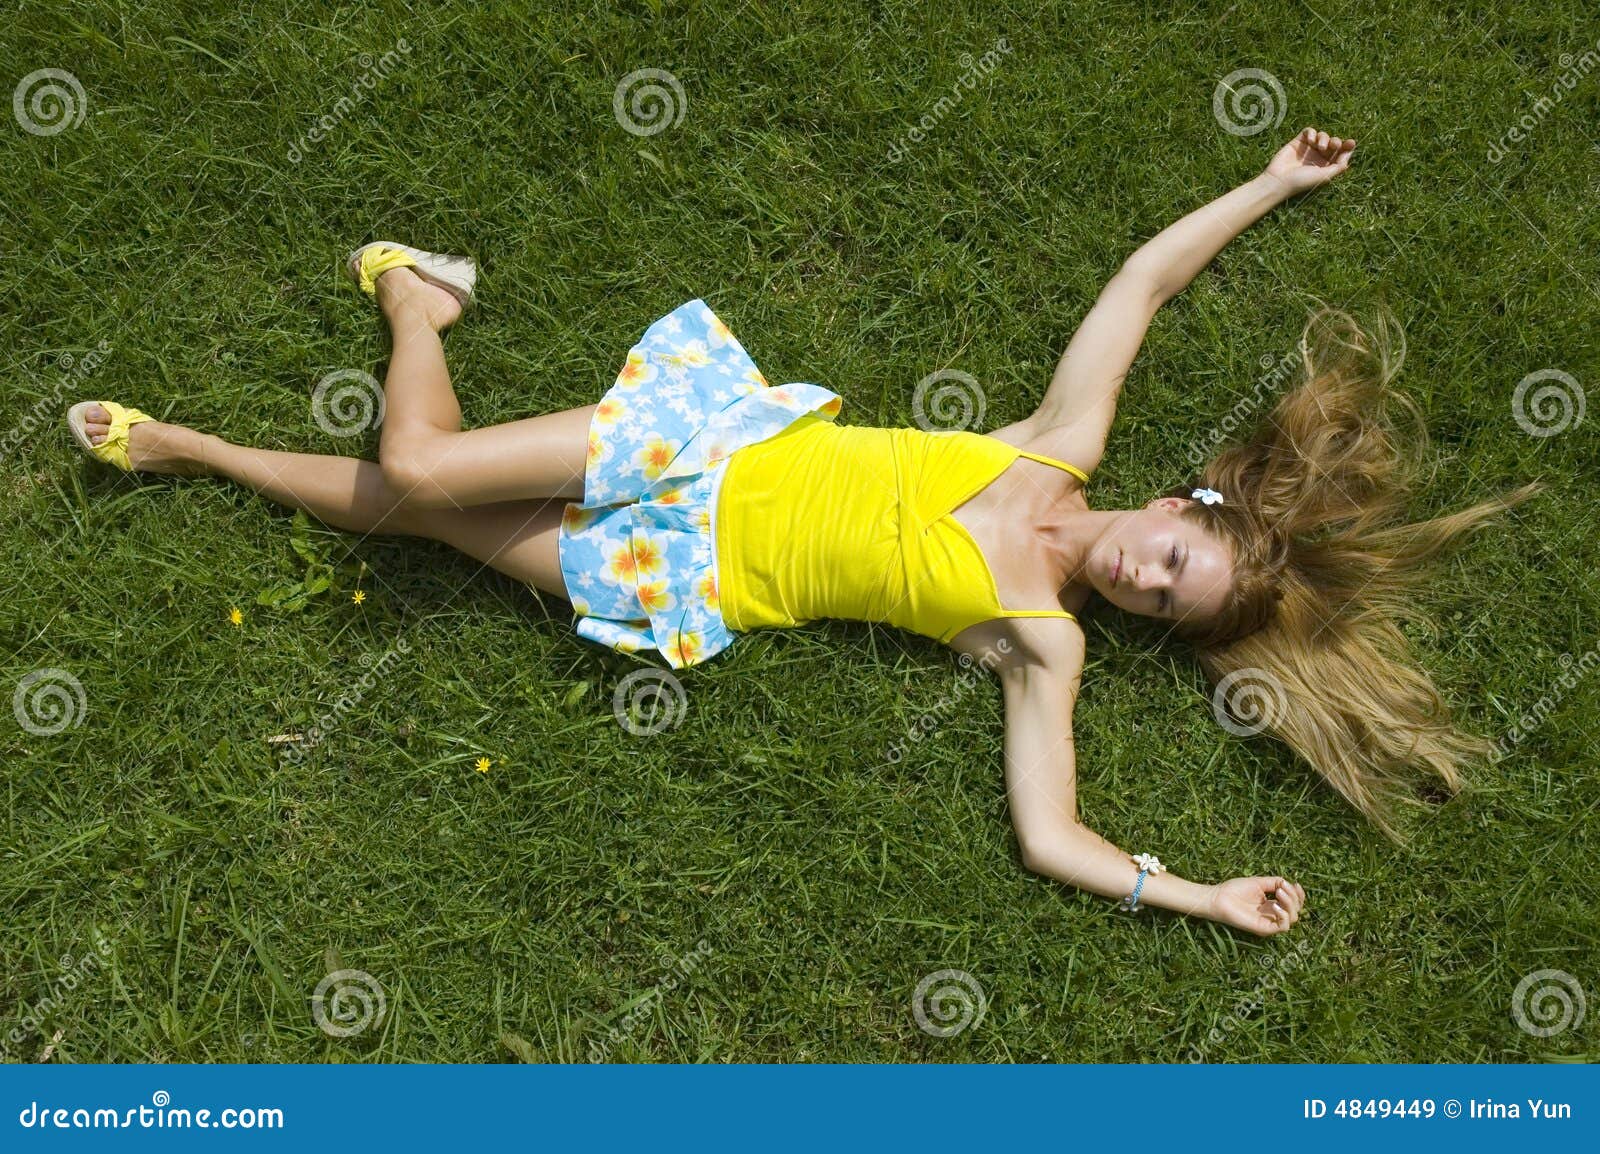 Summer joy stock image. Image of grass, healthy, caucasian - 4849449